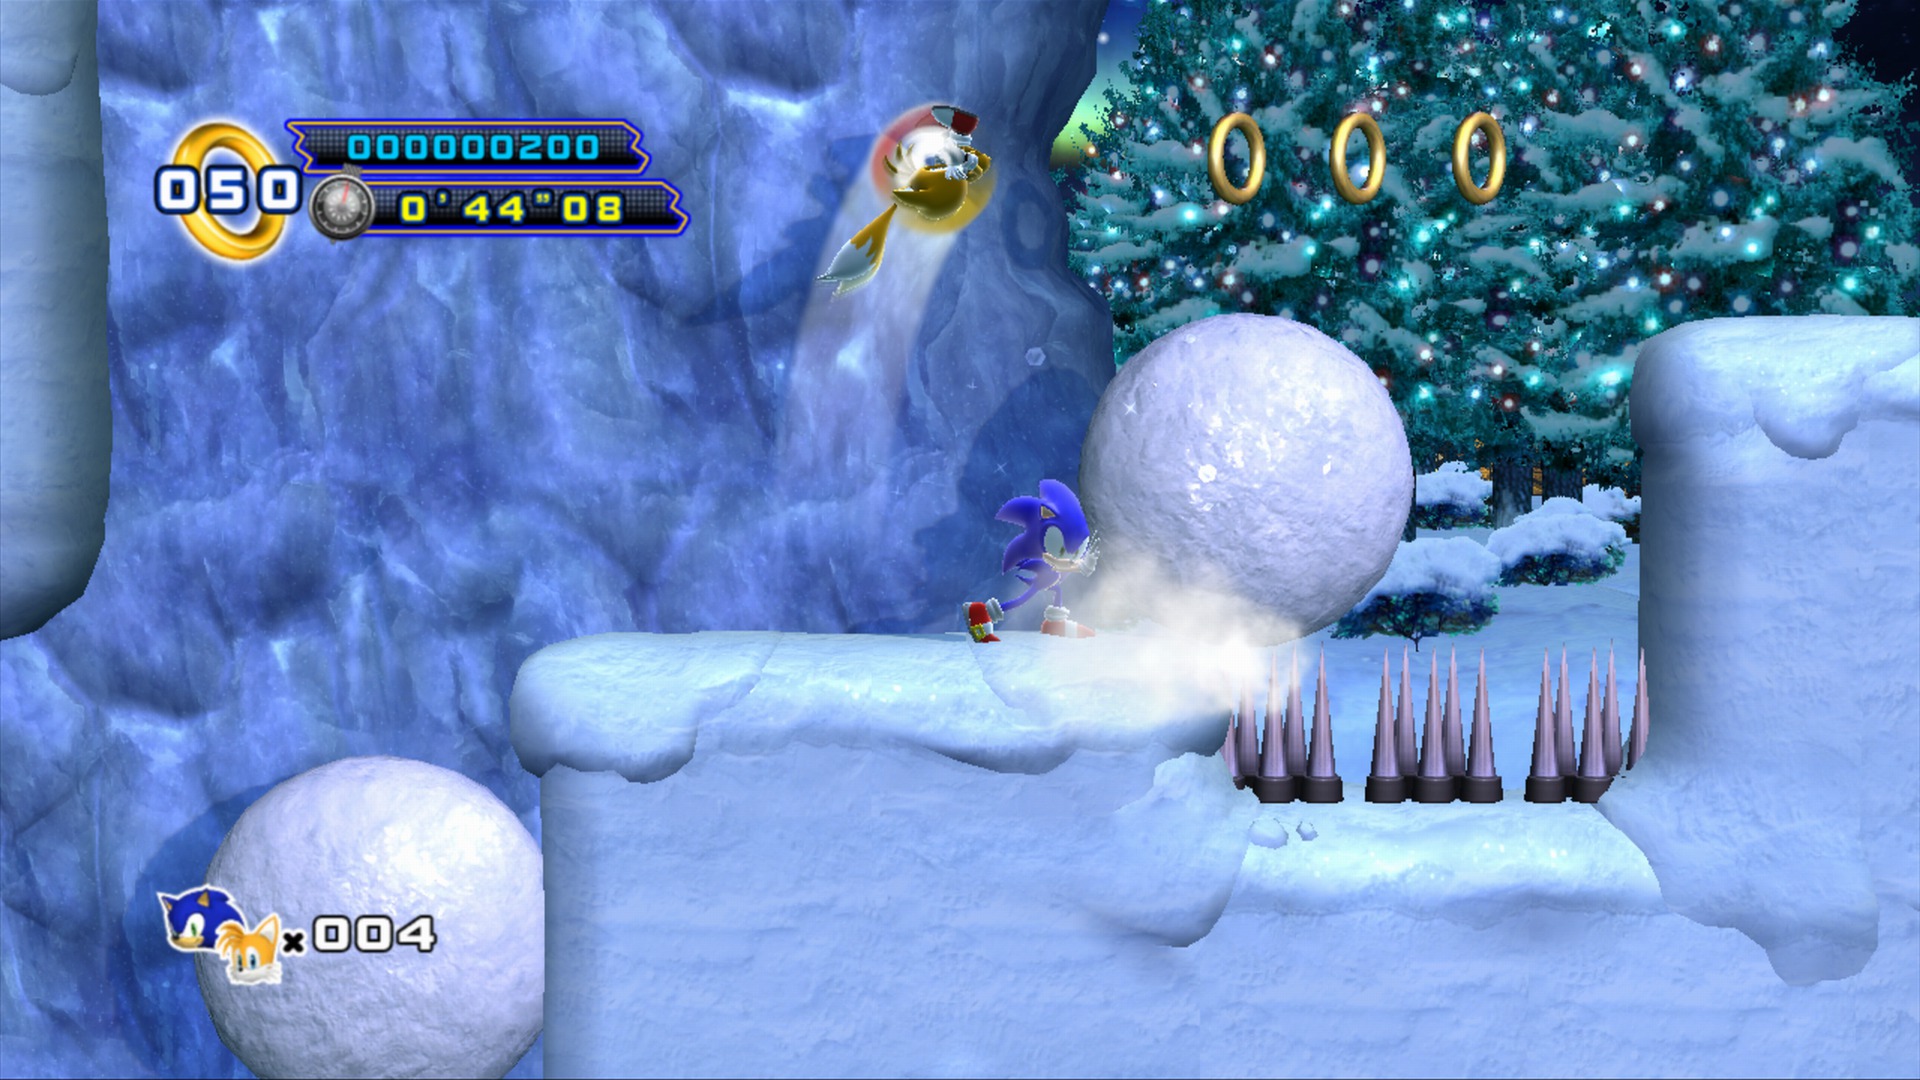 Sonic the Hedgehog 4 - Episode II on Steam